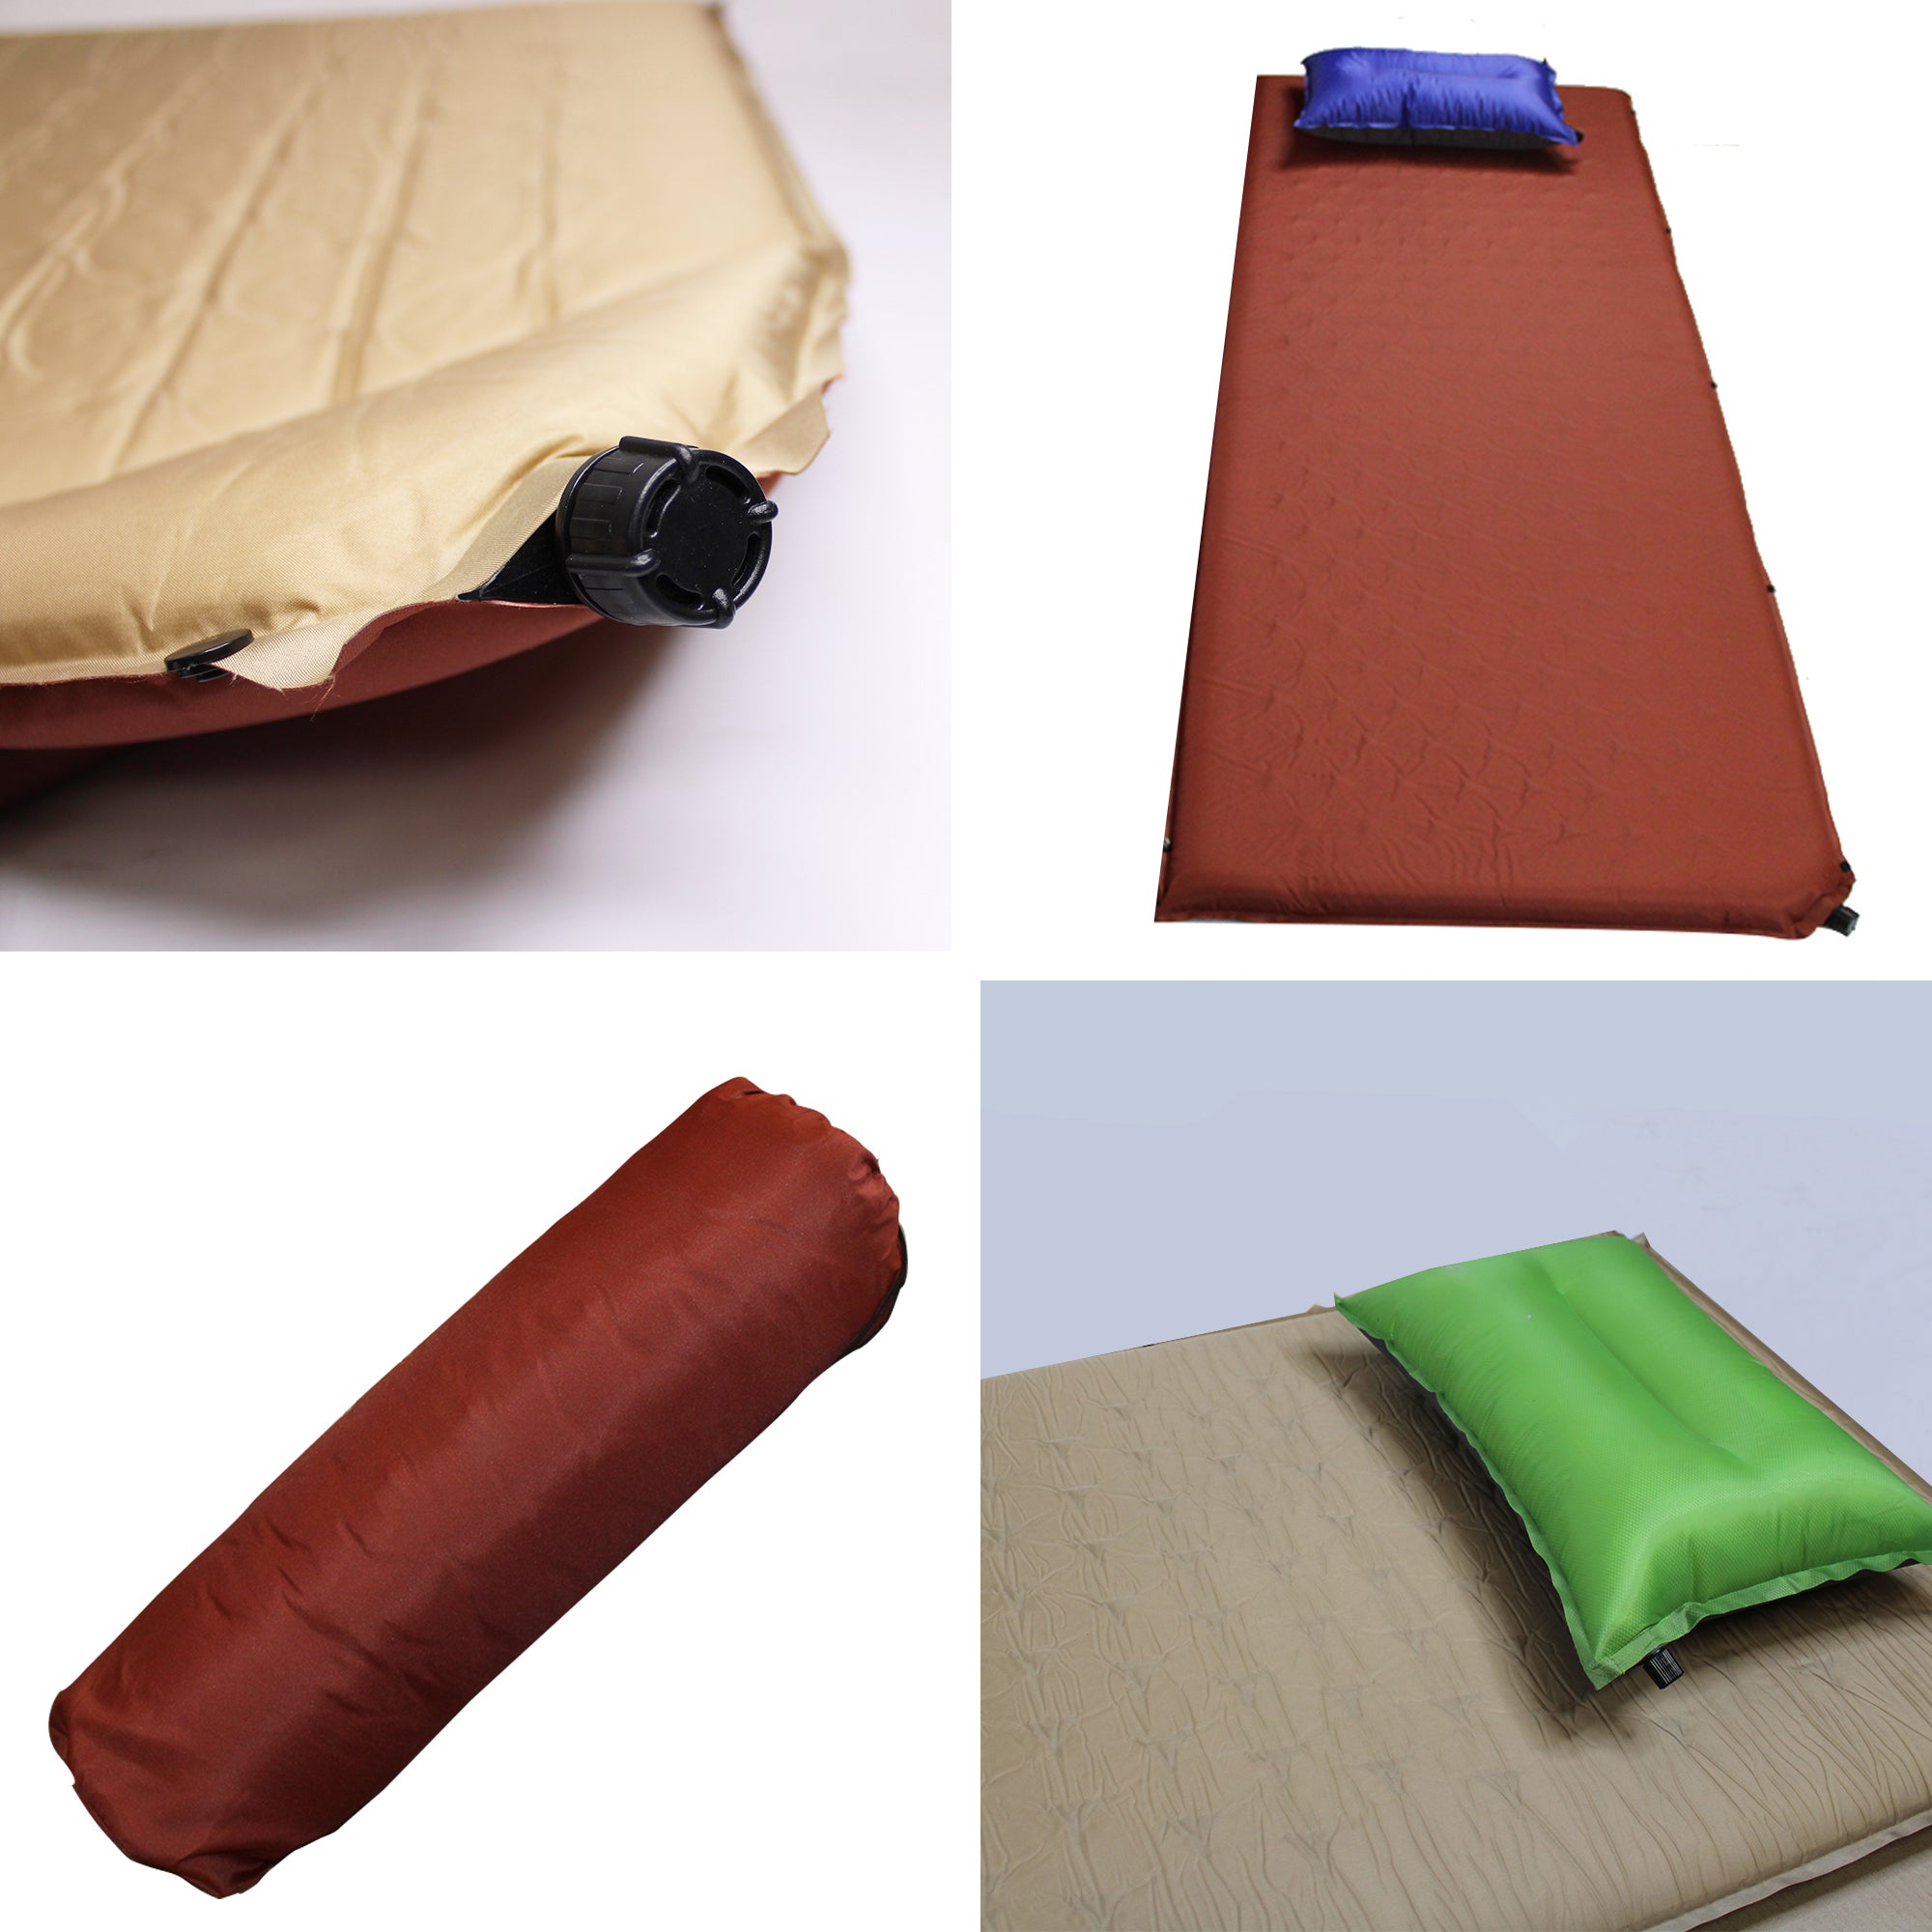 184x60cm Ultralight Self-Inflating Foam Waterproof Camping Mattress with Carry Bag